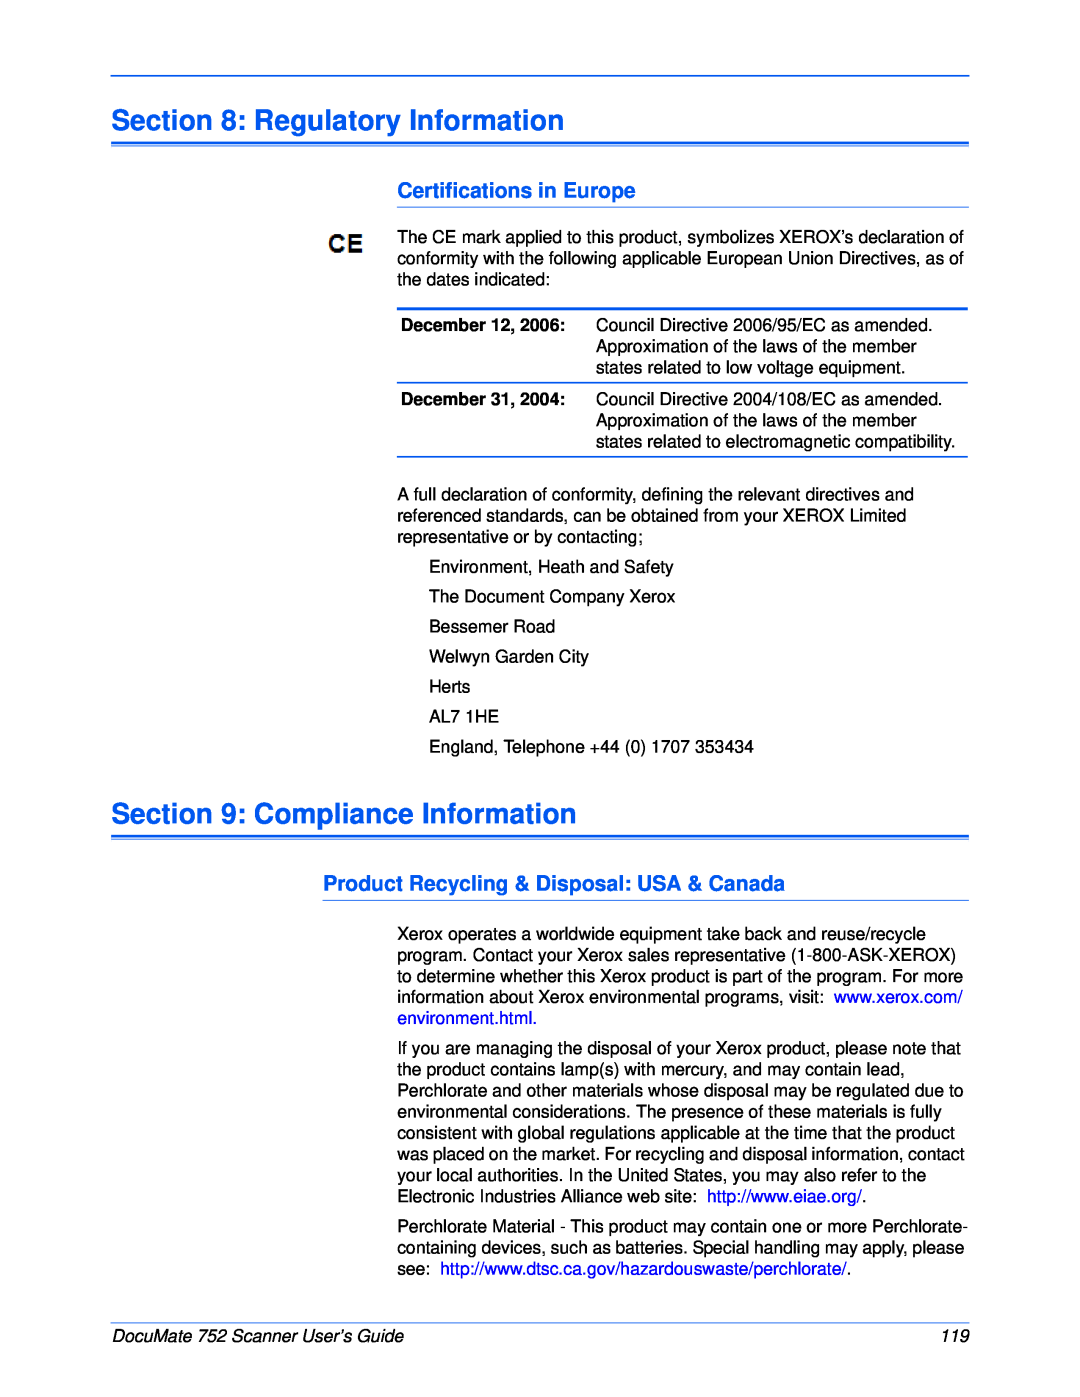 Xerox manual Regulatory Information, Compliance Information, Certifications in Europe, DocuMate 752 Scanner User’s Guide 